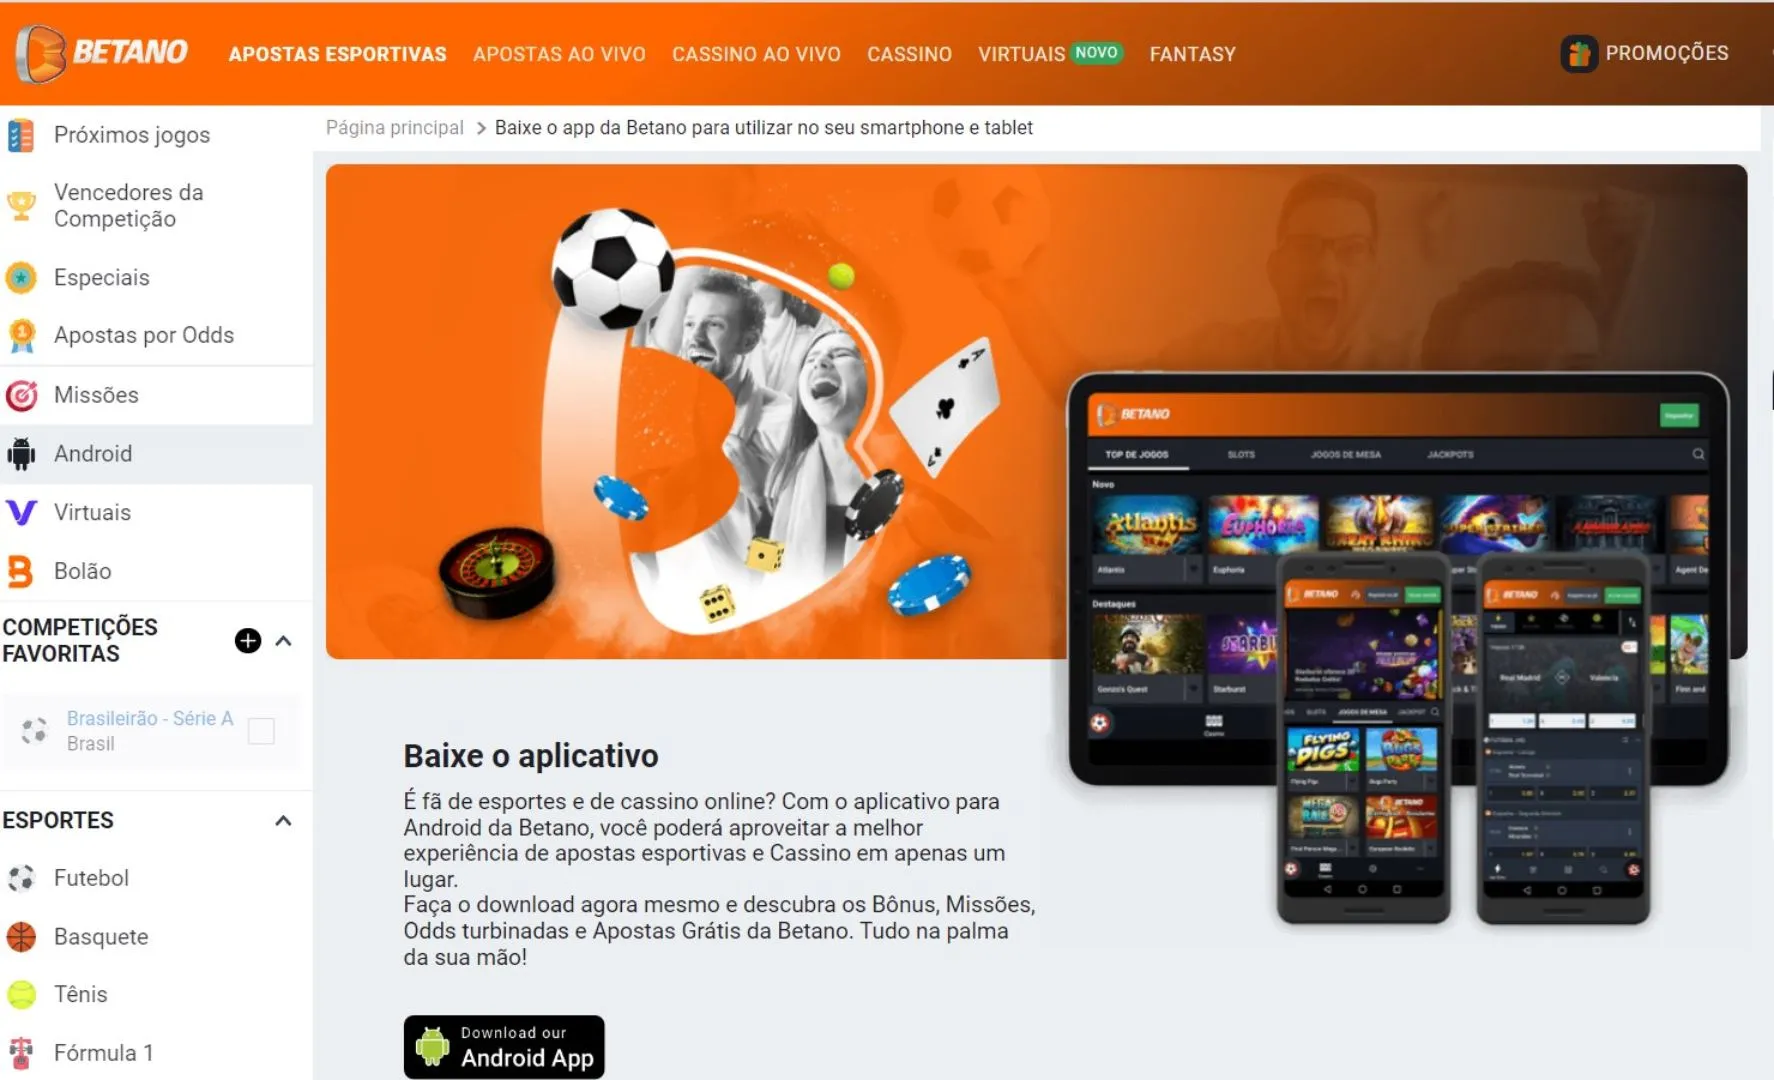 Betano App: saiba como usar o aplicativo de apostas